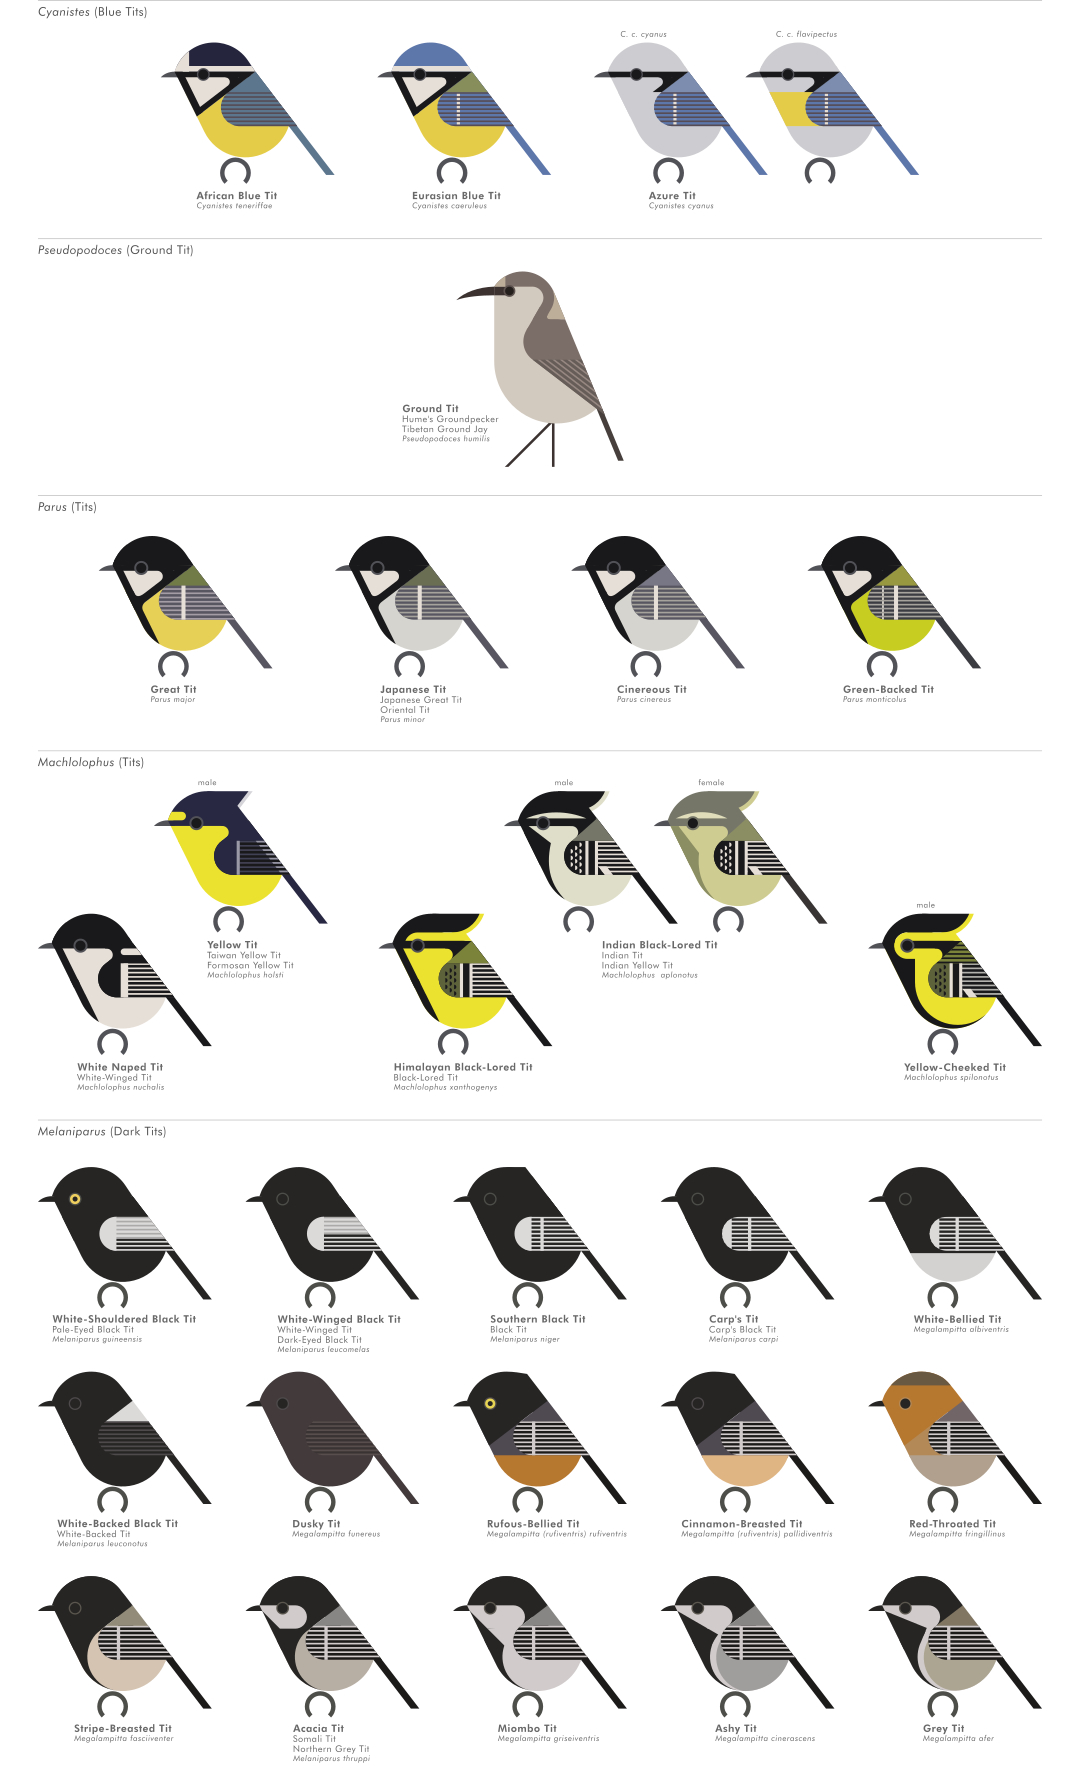 scott partridge - AVE - avian vector encyclopedia - tits - bird vector art